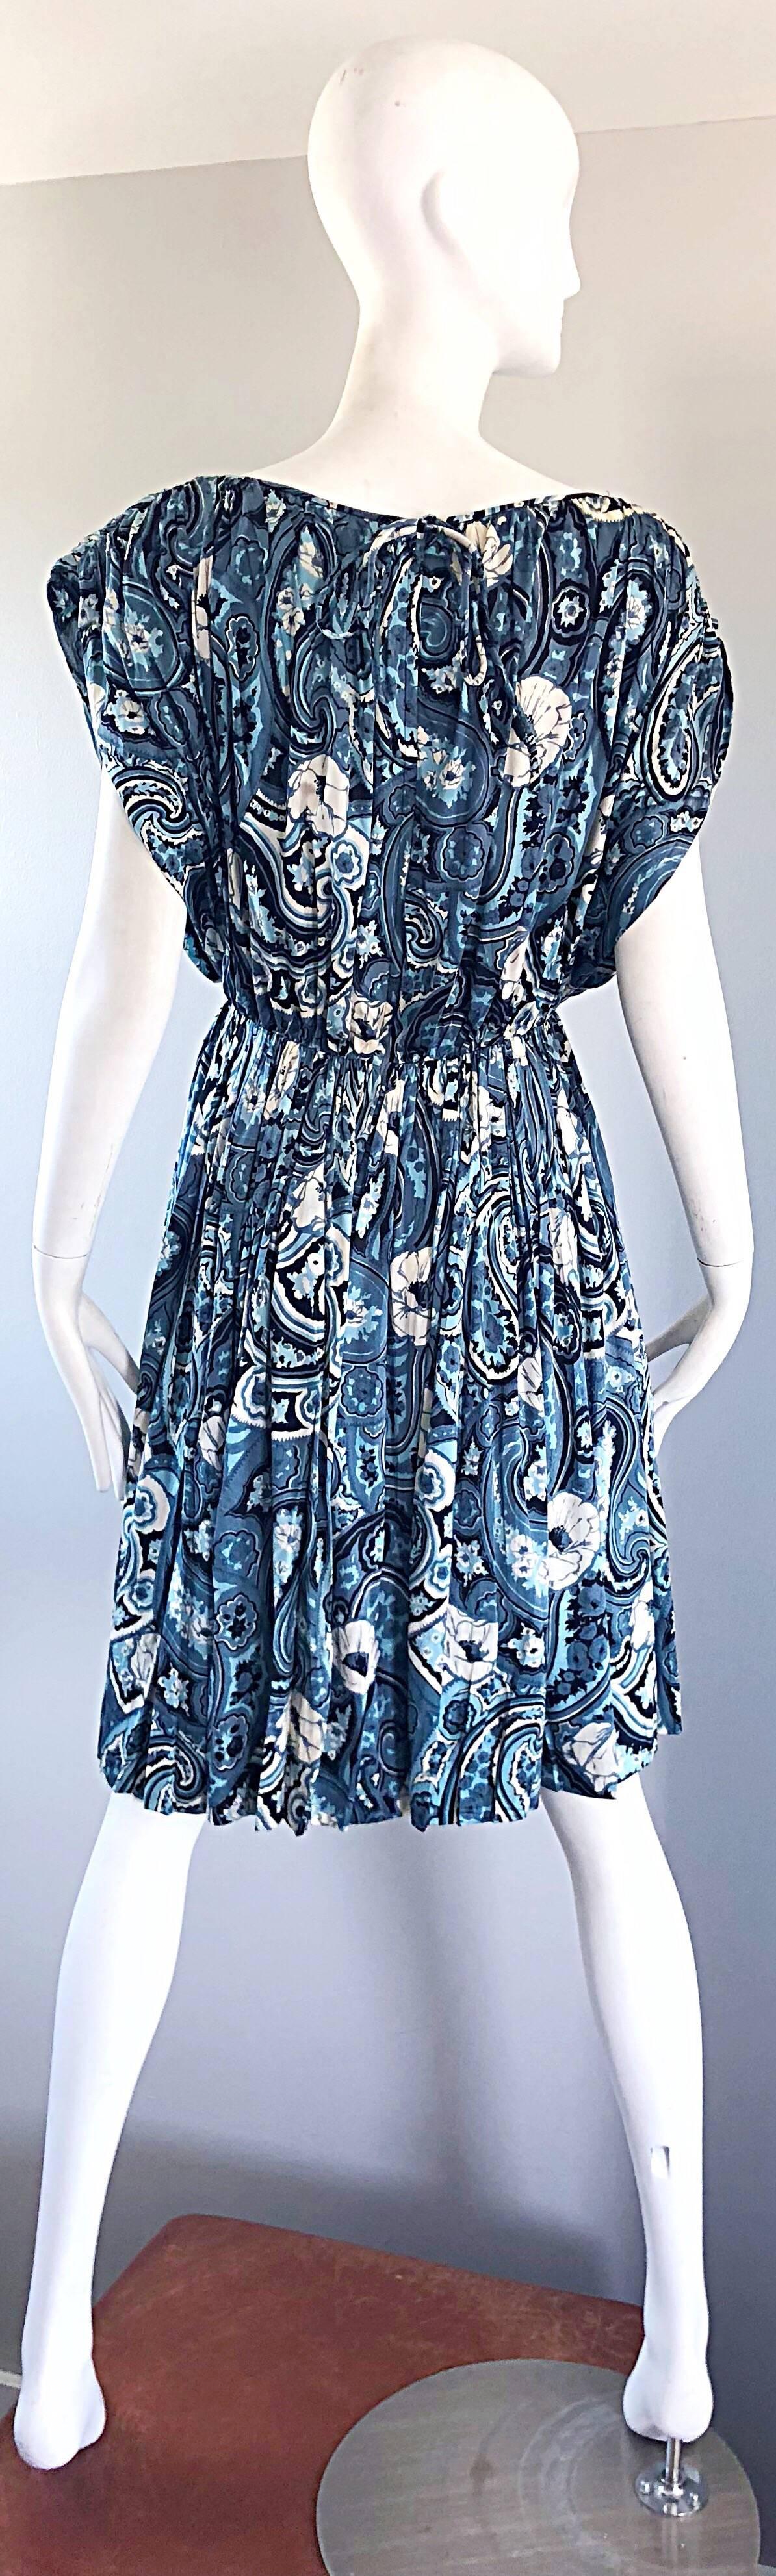 Rare 1970s Townley Blue + White Paisley Flower Print Vintage 70s Dress For Sale 4